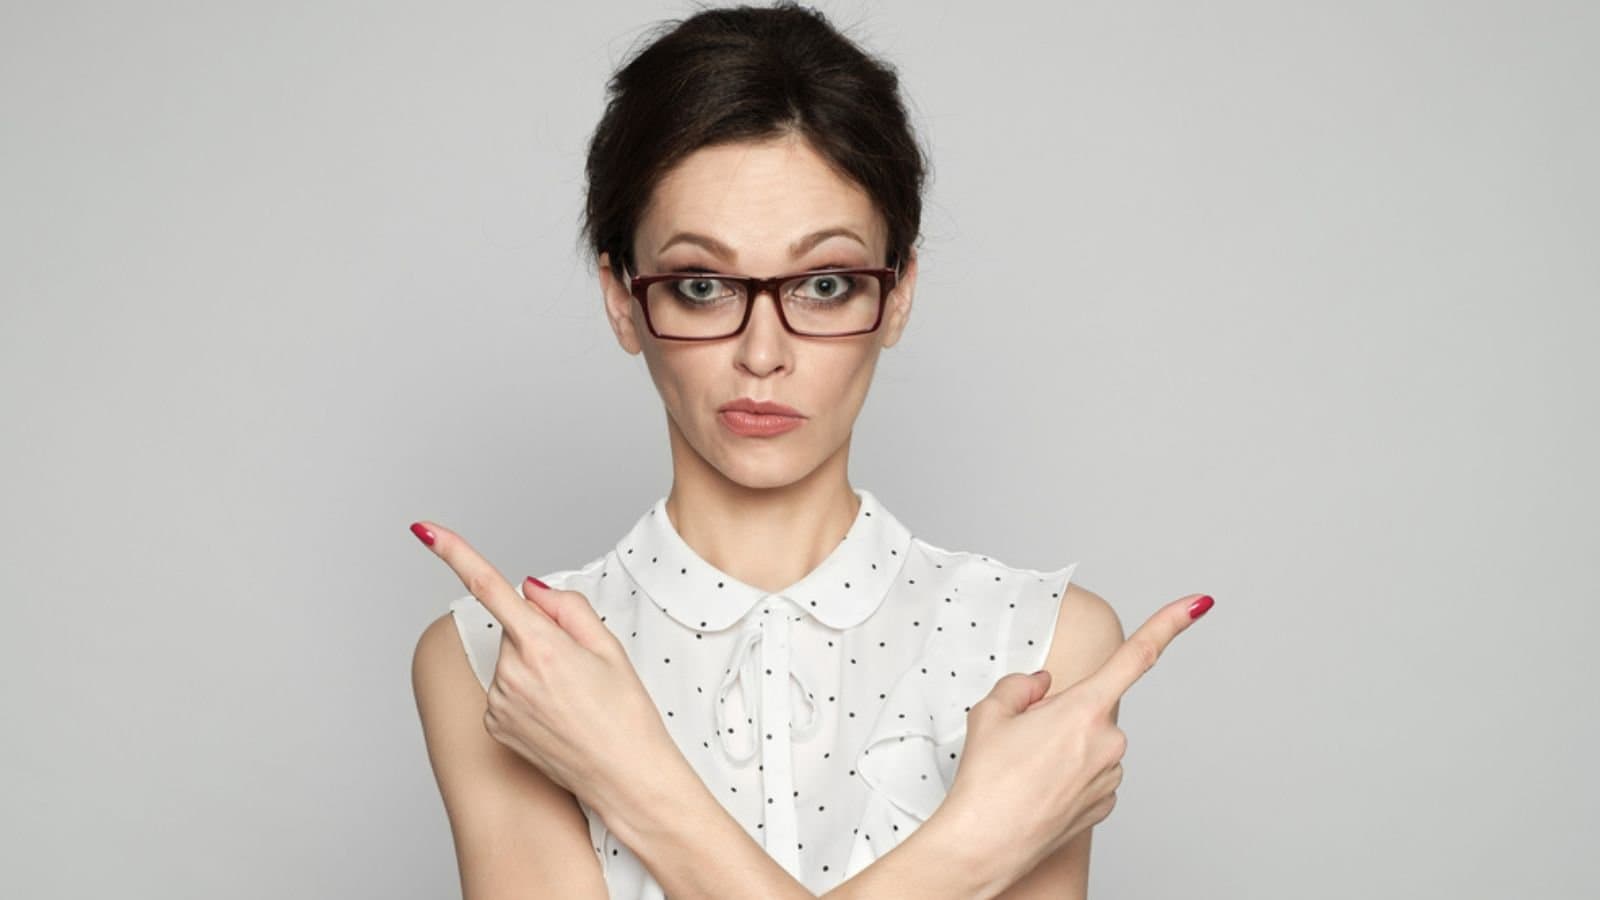 Confused female teacher in glasses